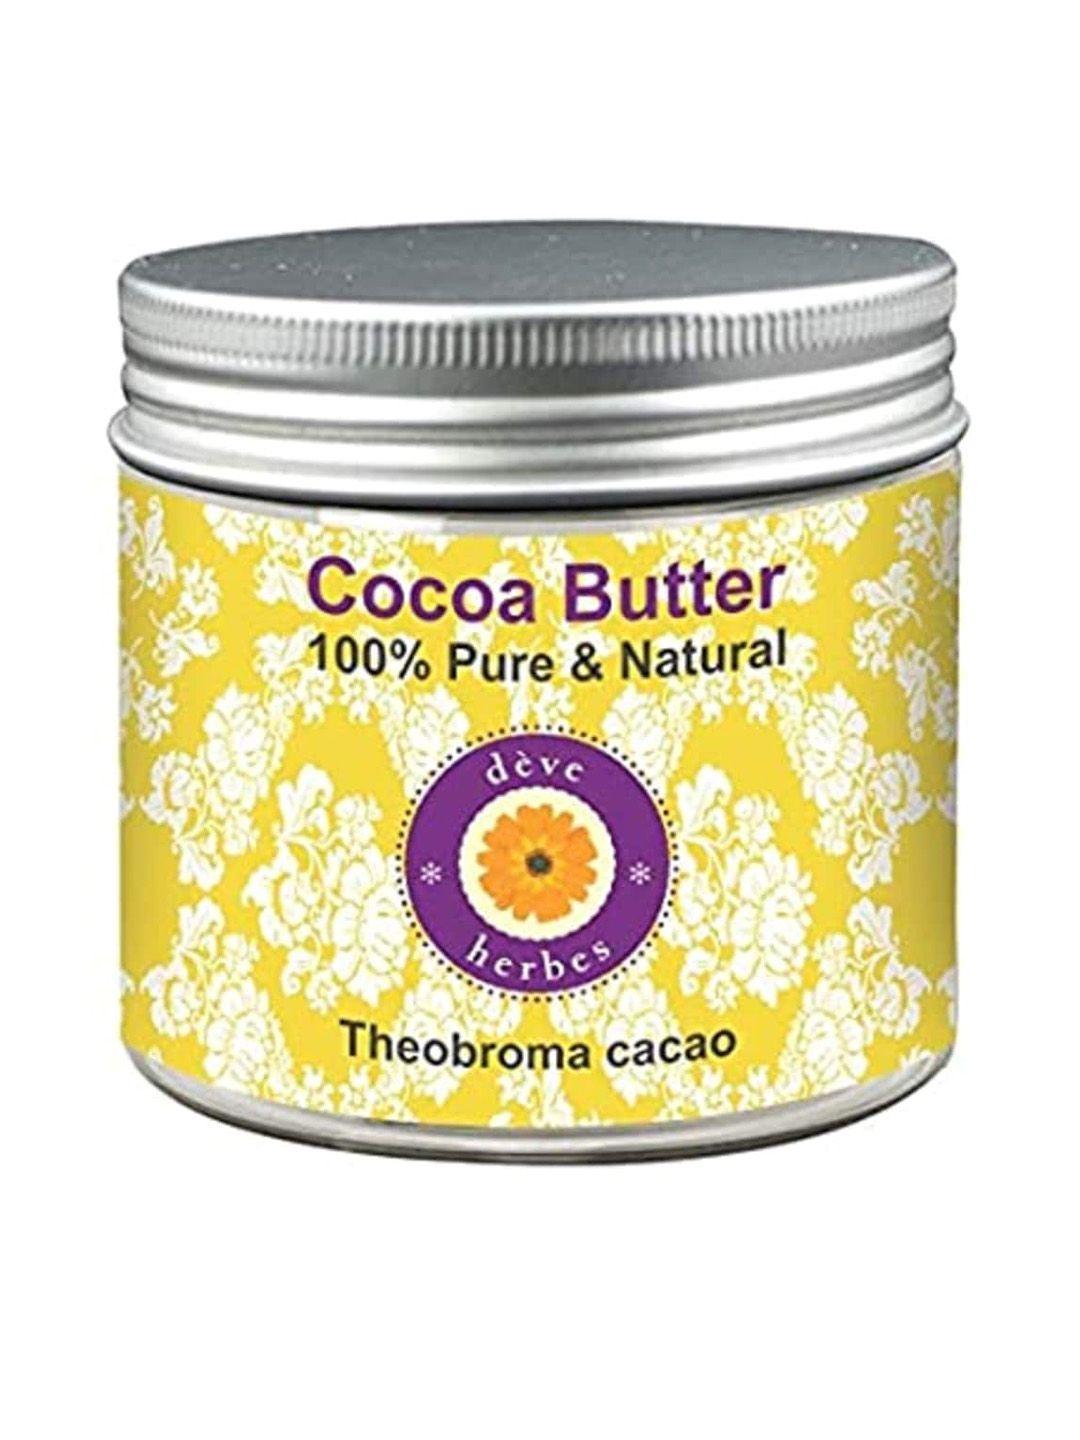 deve herbes natural therapeutic grade pure cocoa body butter - 50g